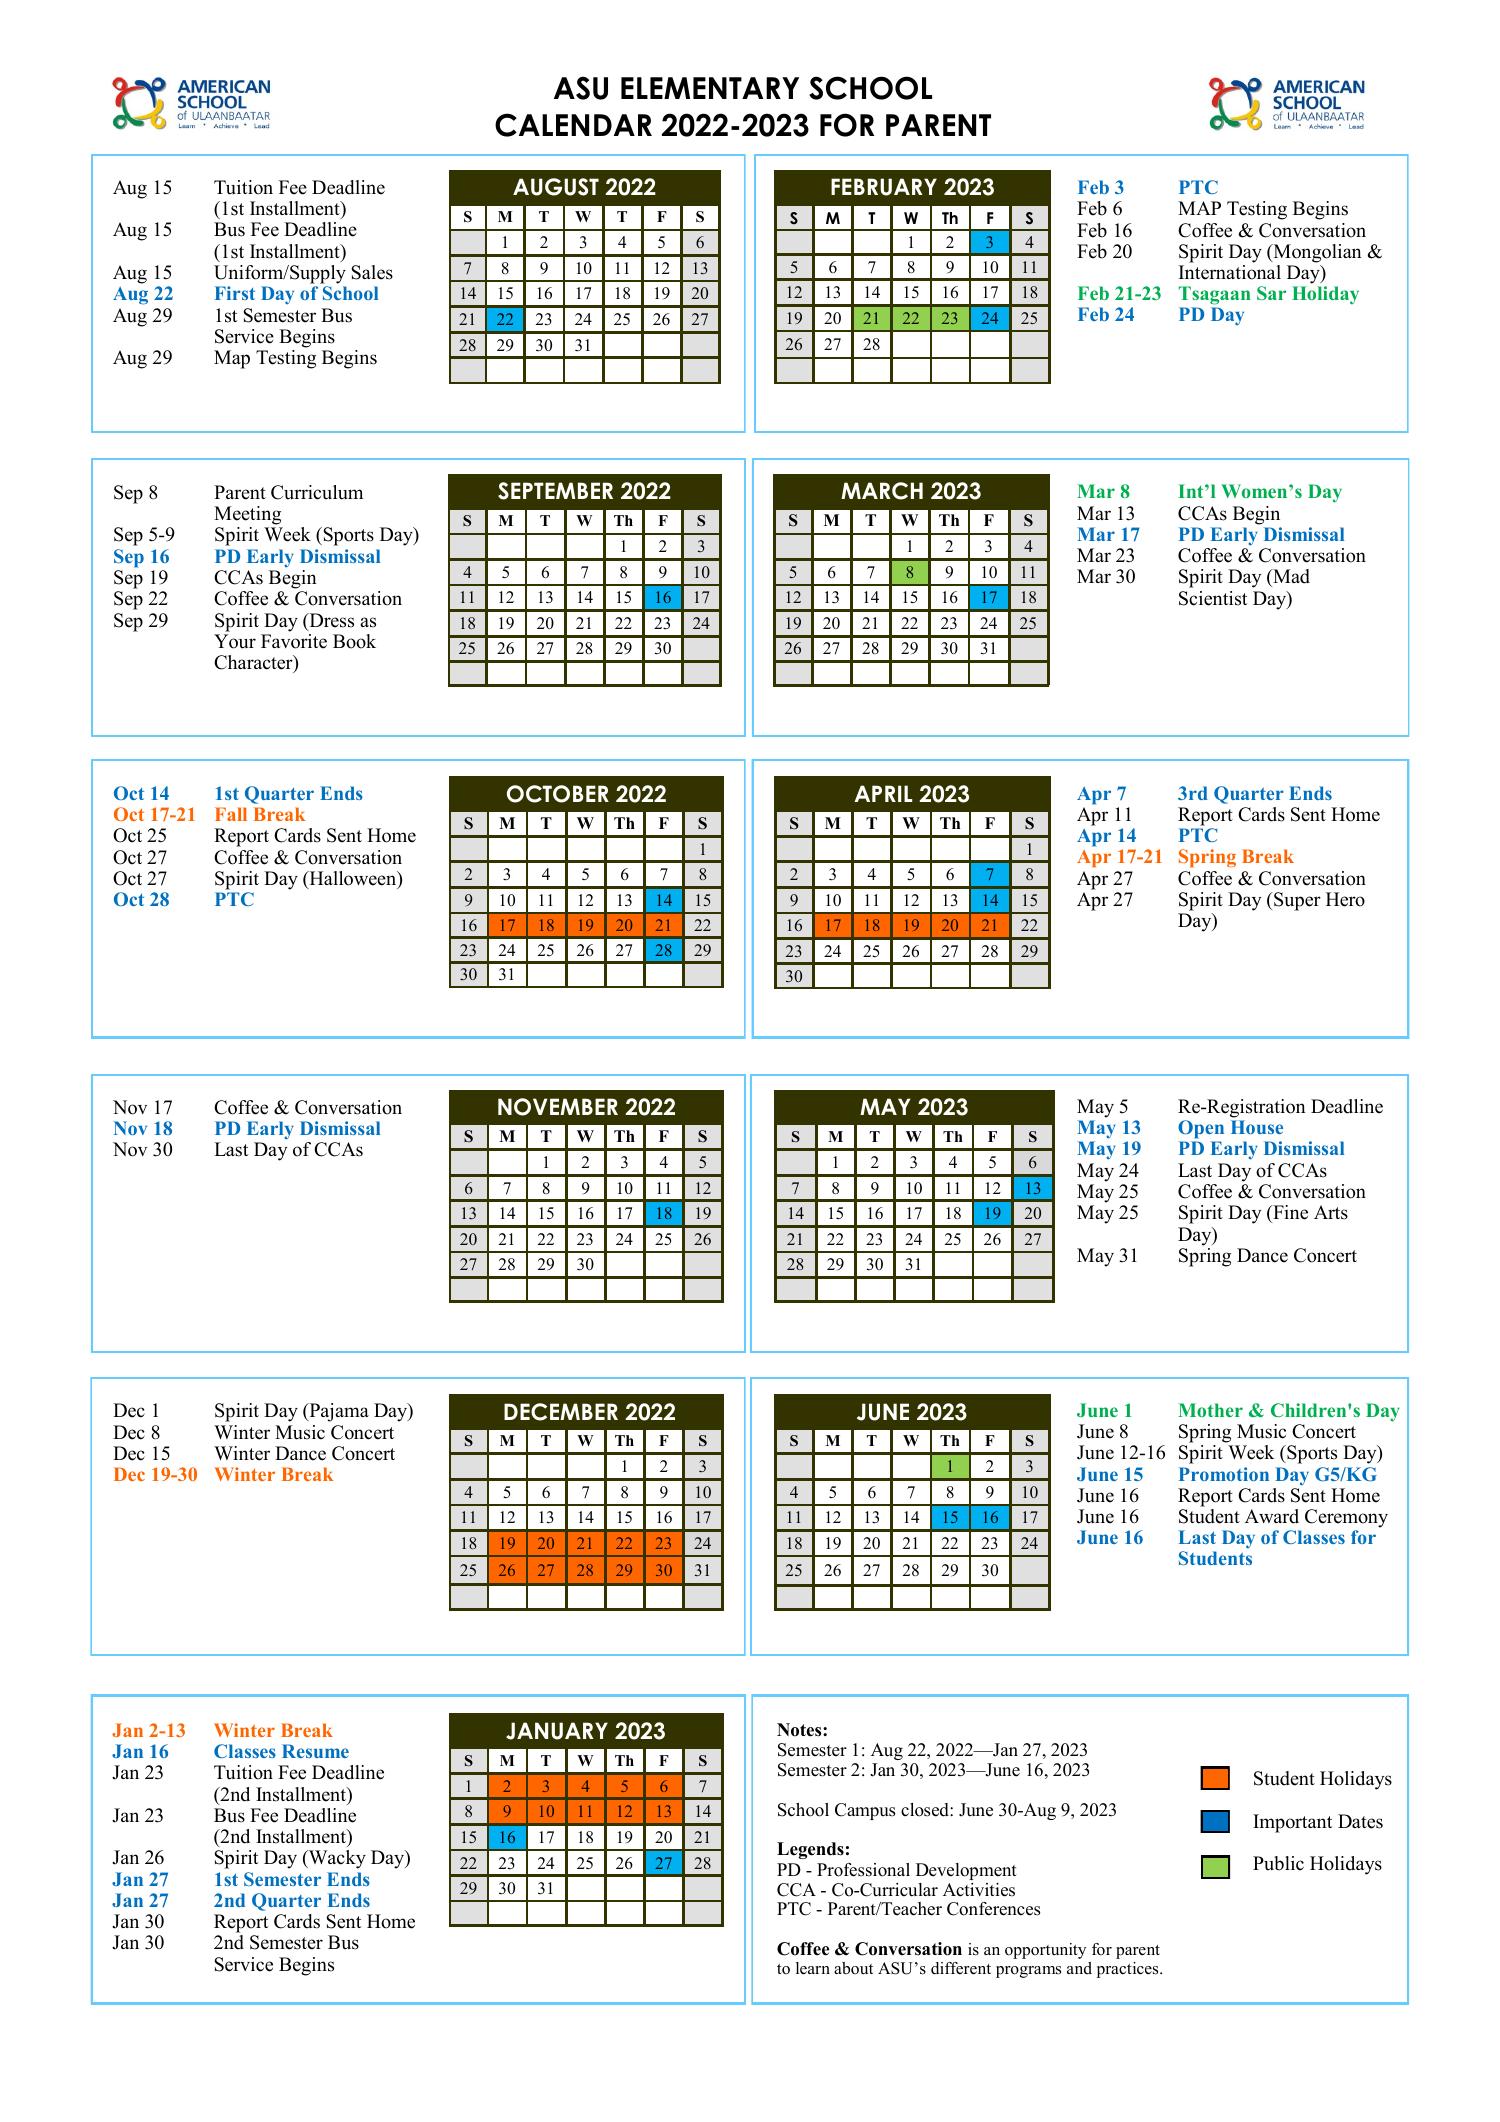 ASU ES Calendar for 202223 for parents.pdf DocDroid